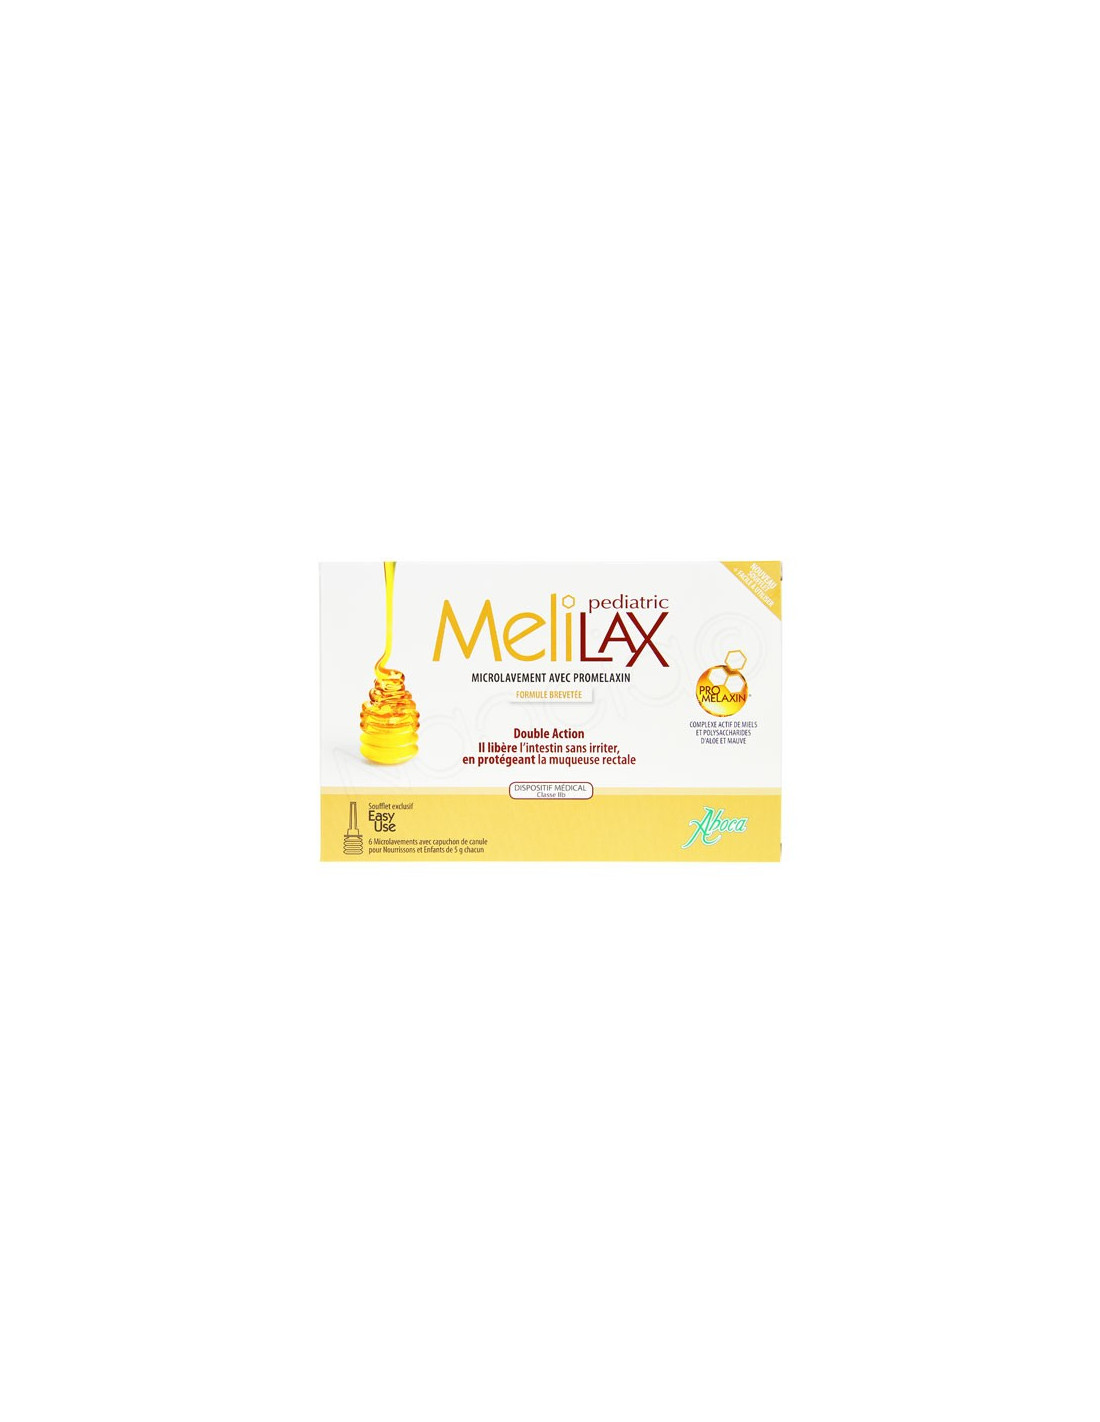 MELILAX Pediatric Microlavement 5g *6